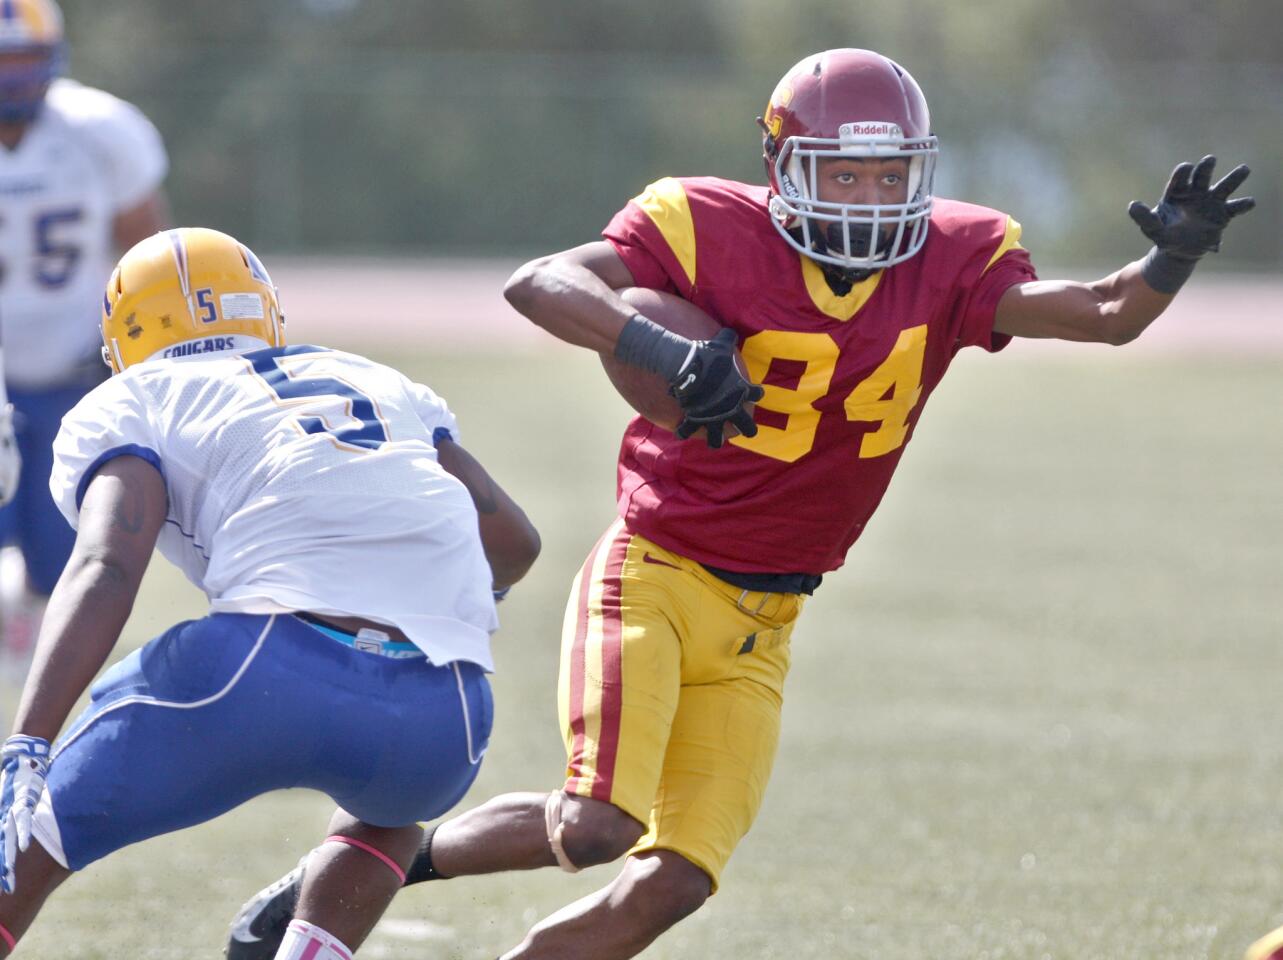 Photo Gallery: Glendale College football vs. L.A. Southwest College at Sartoris field